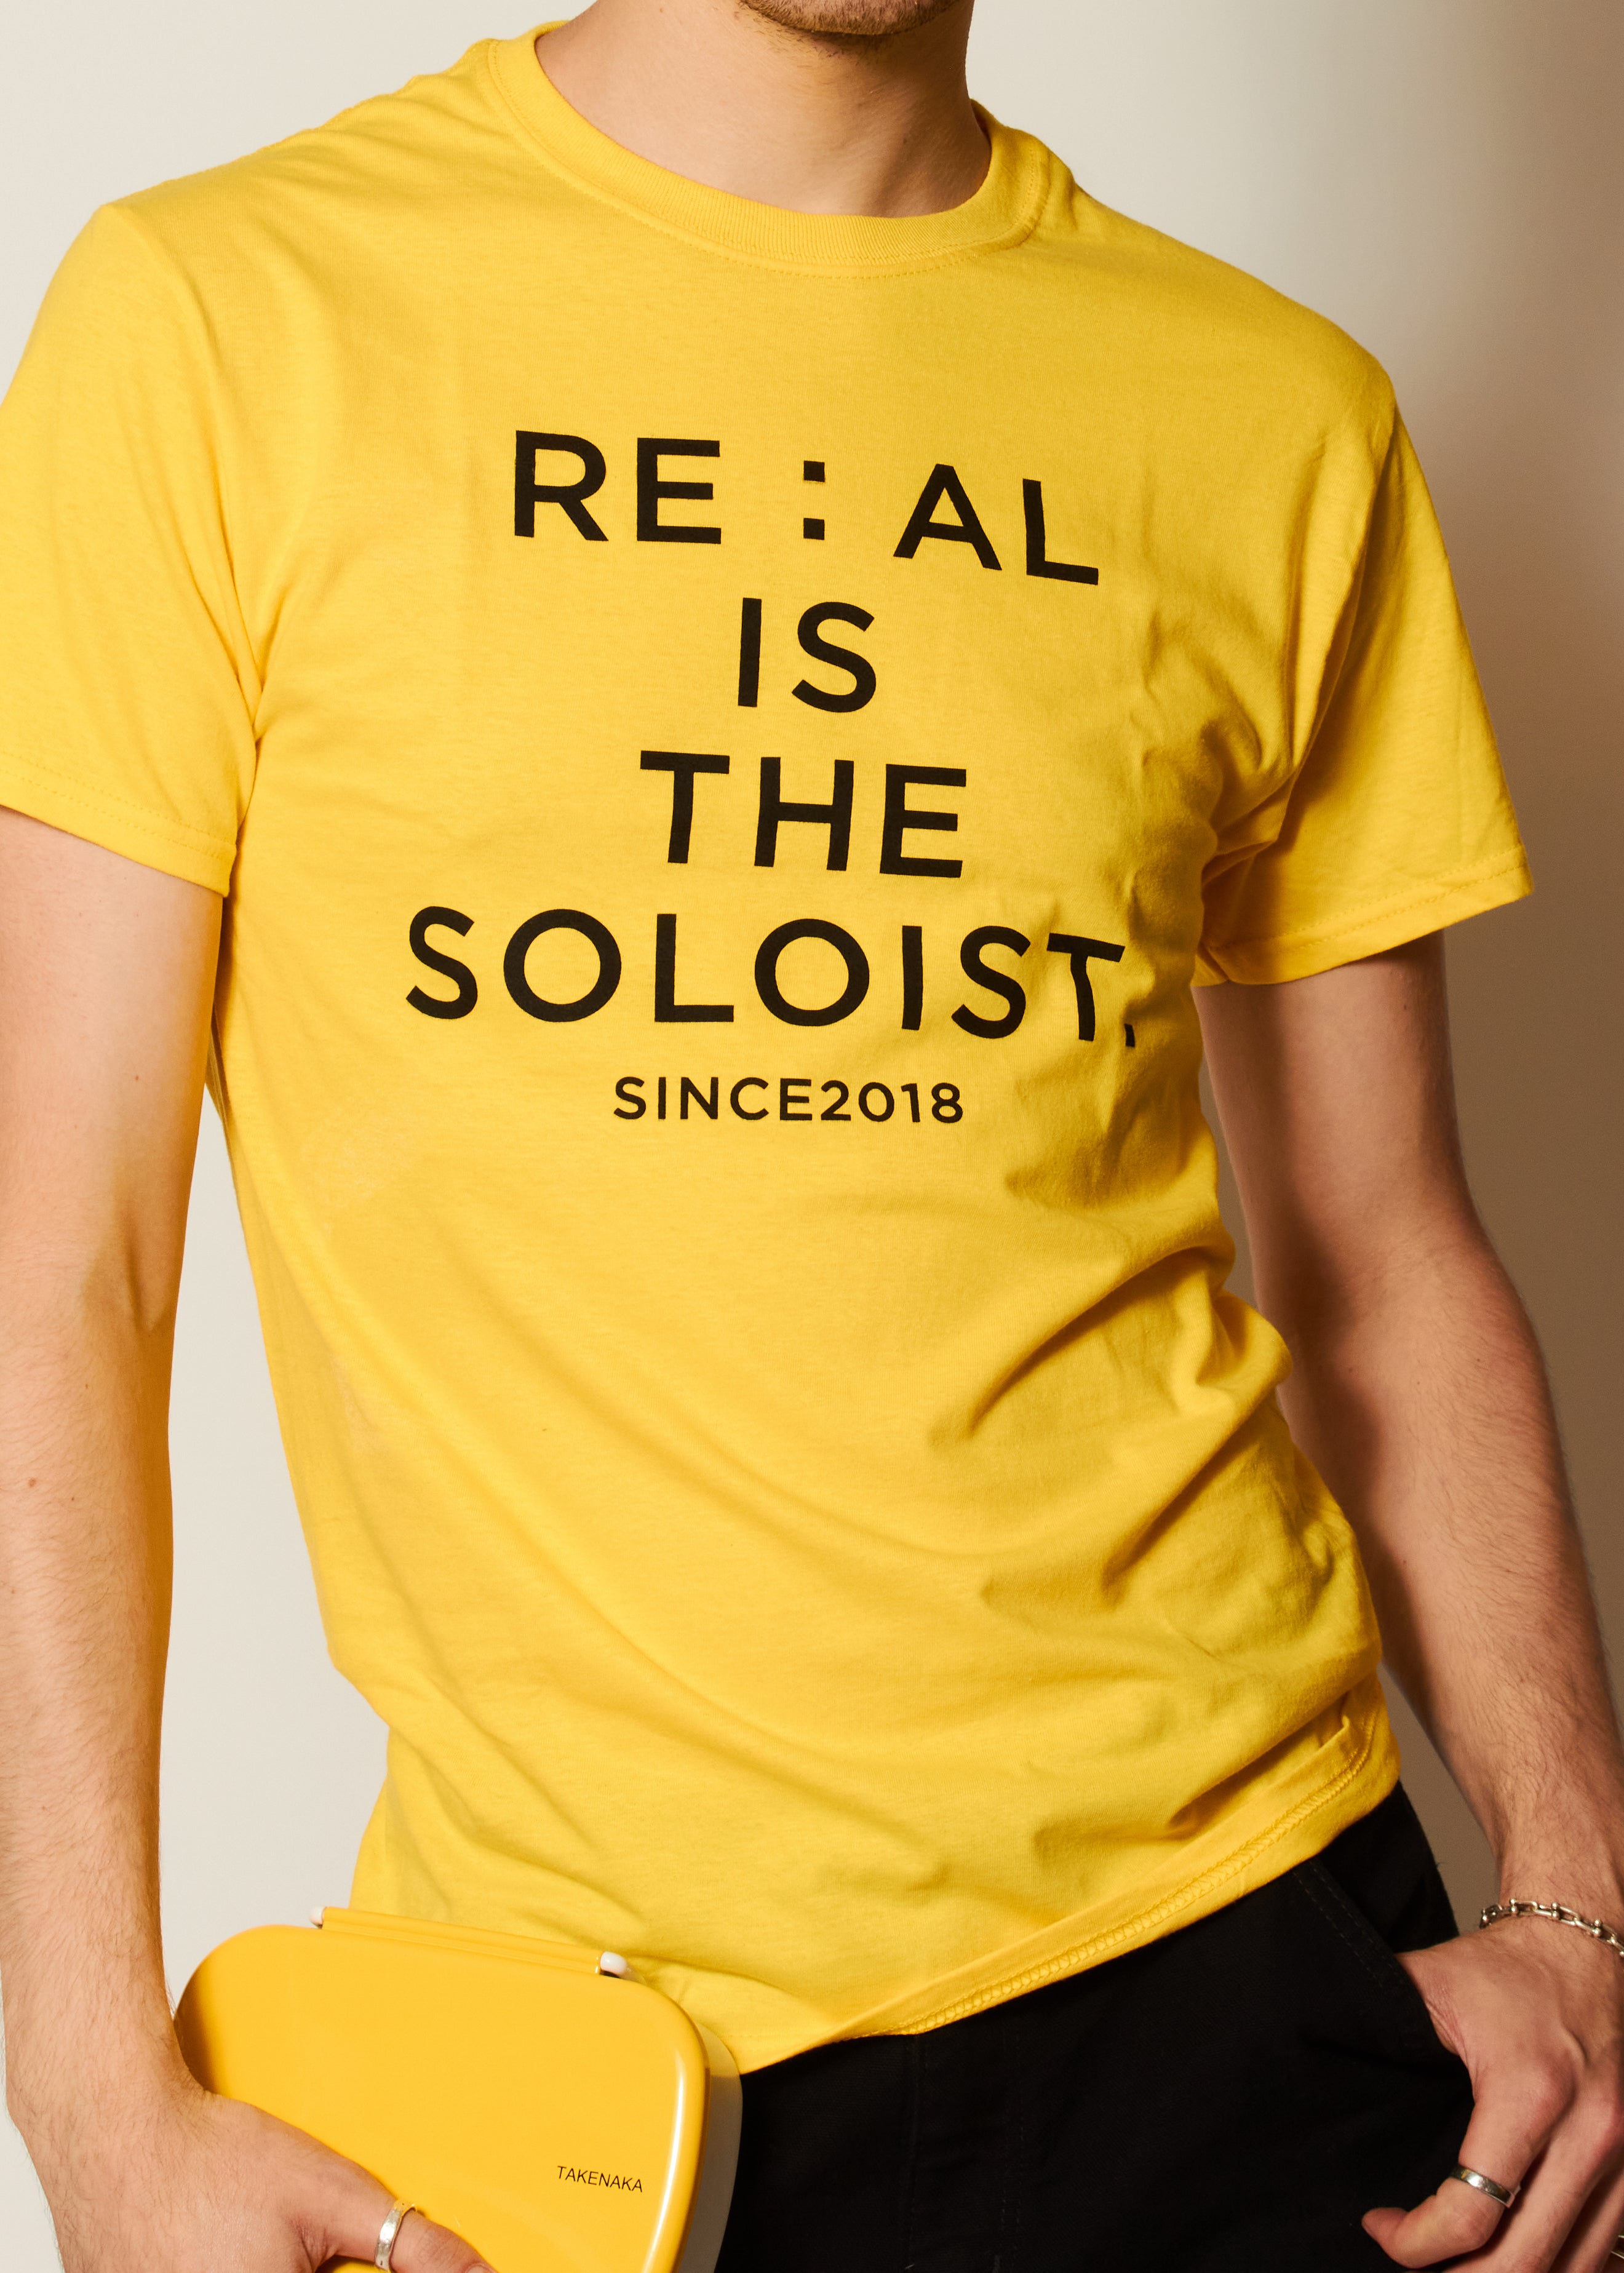 RE:AL IS THE SOLOIST "100% RE:AL" I'M A SOUVENIR T-SHIRT